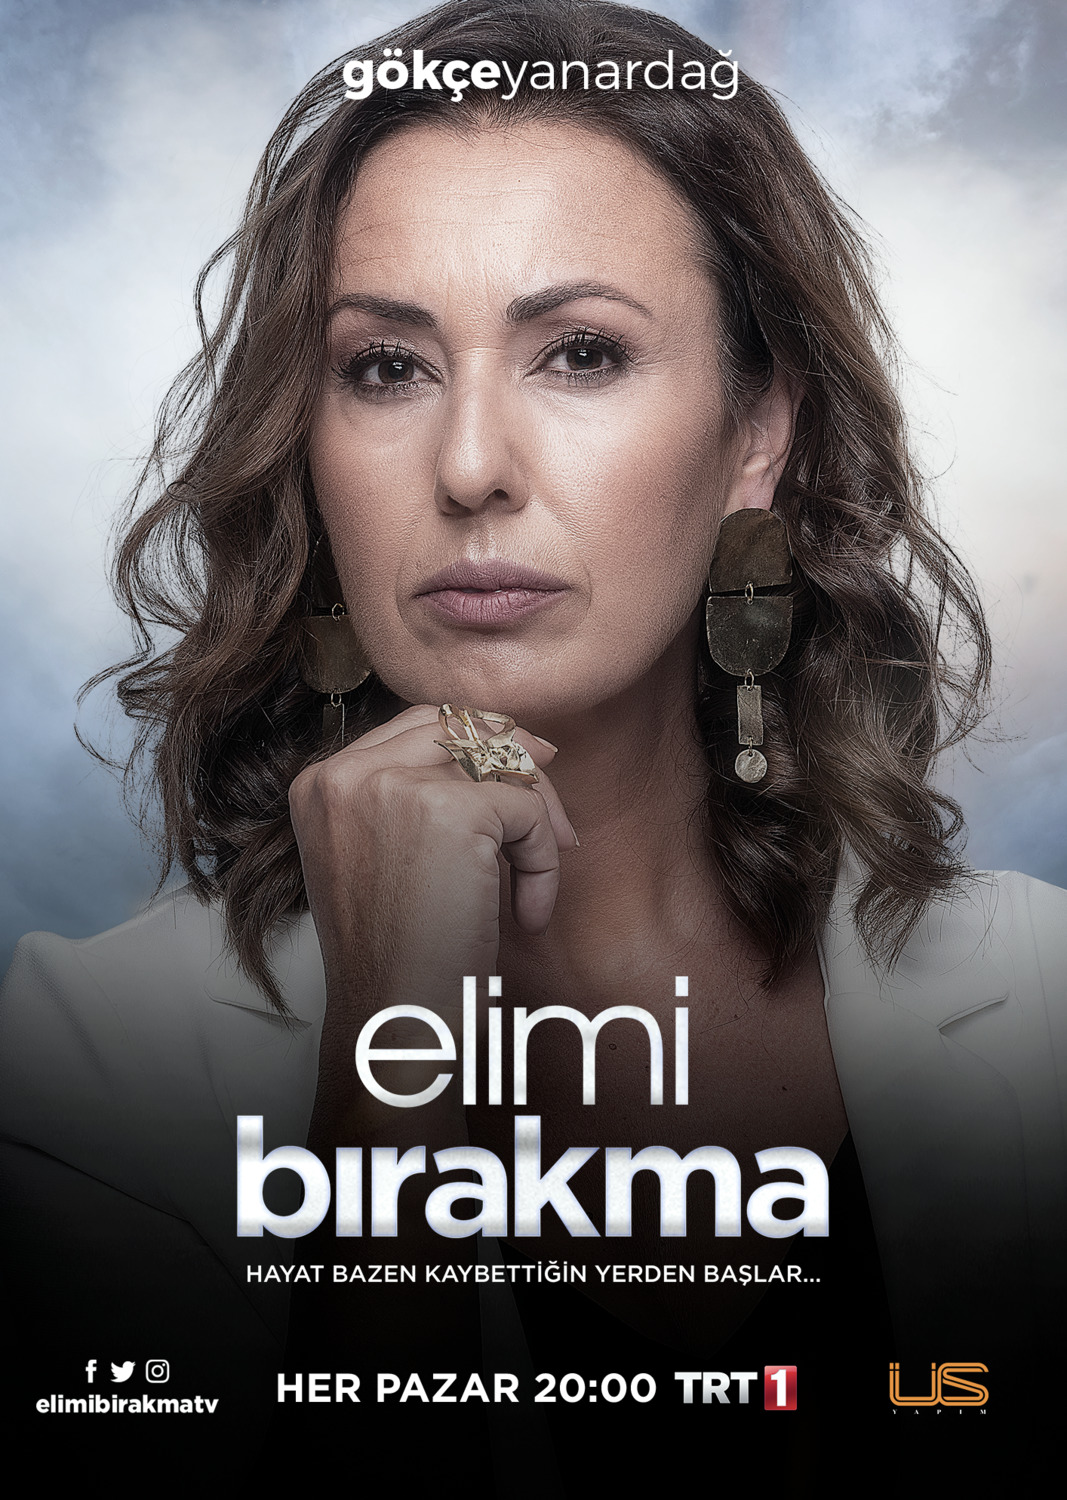 Extra Large TV Poster Image for Elimi birakma (#11 of 20)